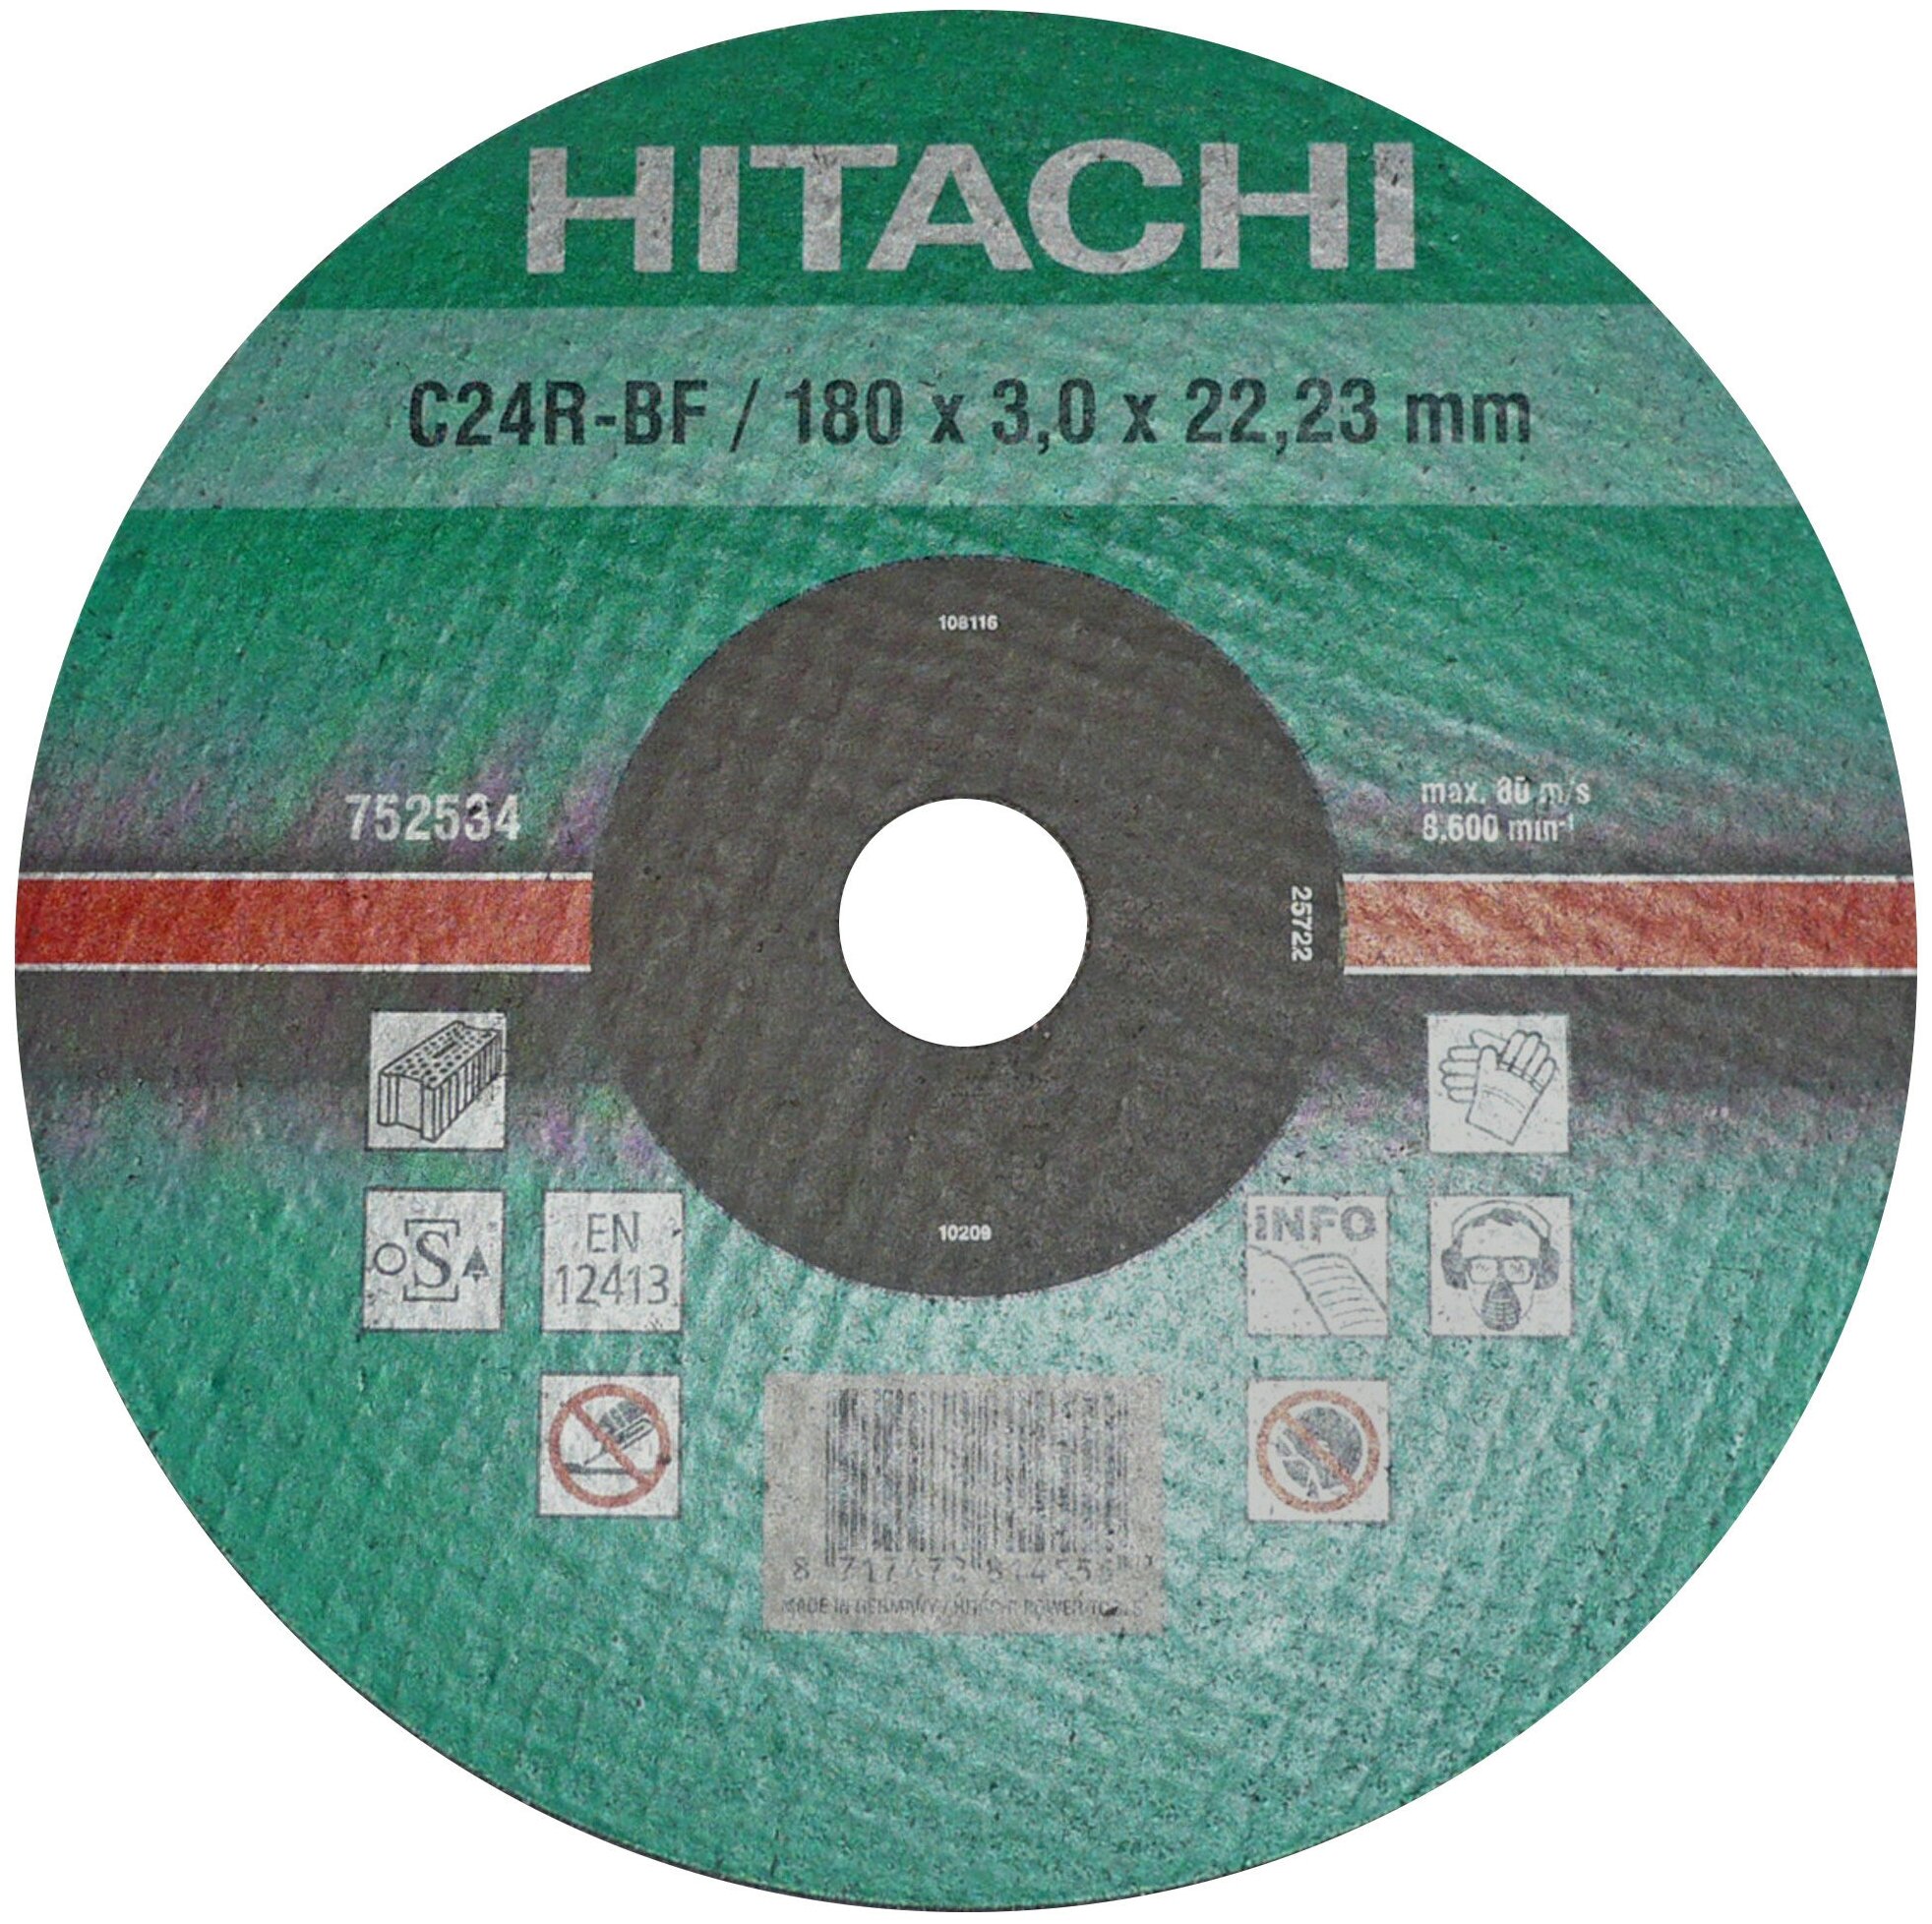   HITACHI HTC-752534,    180322,2